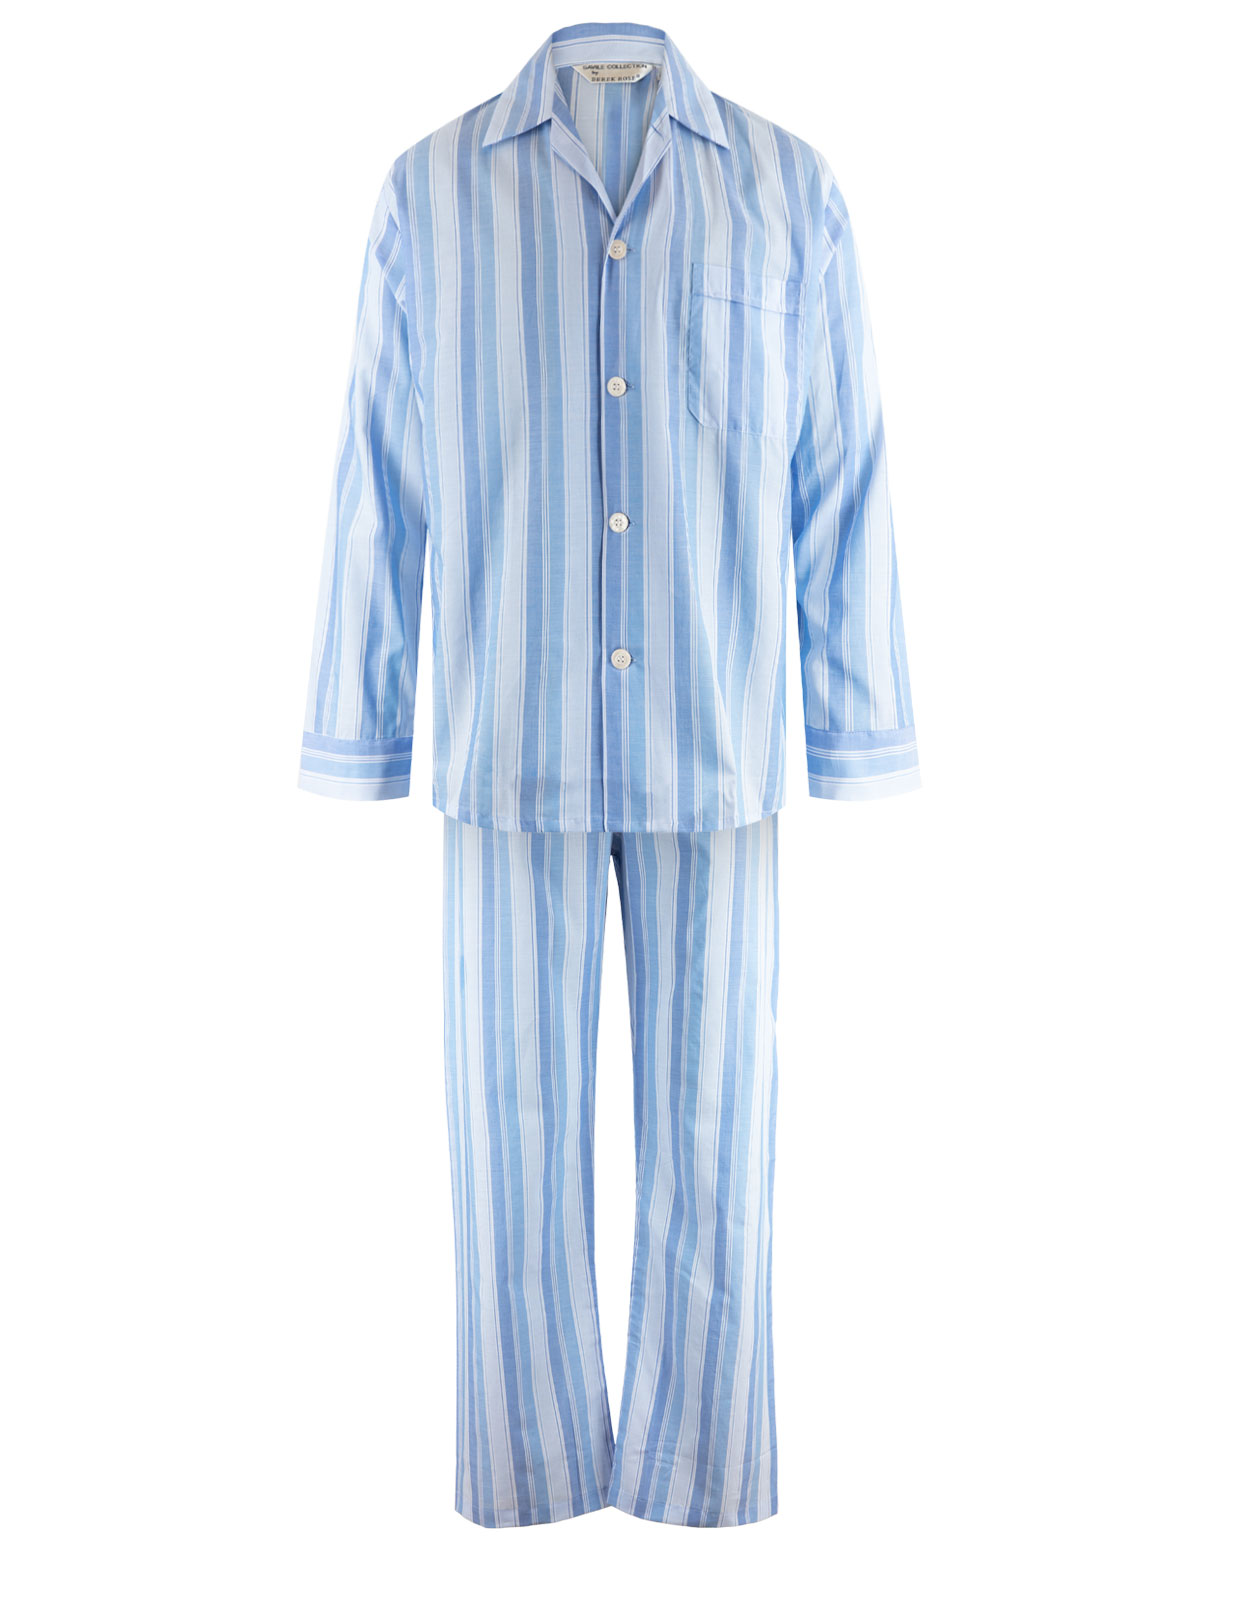 Saville Pyjamas Blå / Vit Stl 48